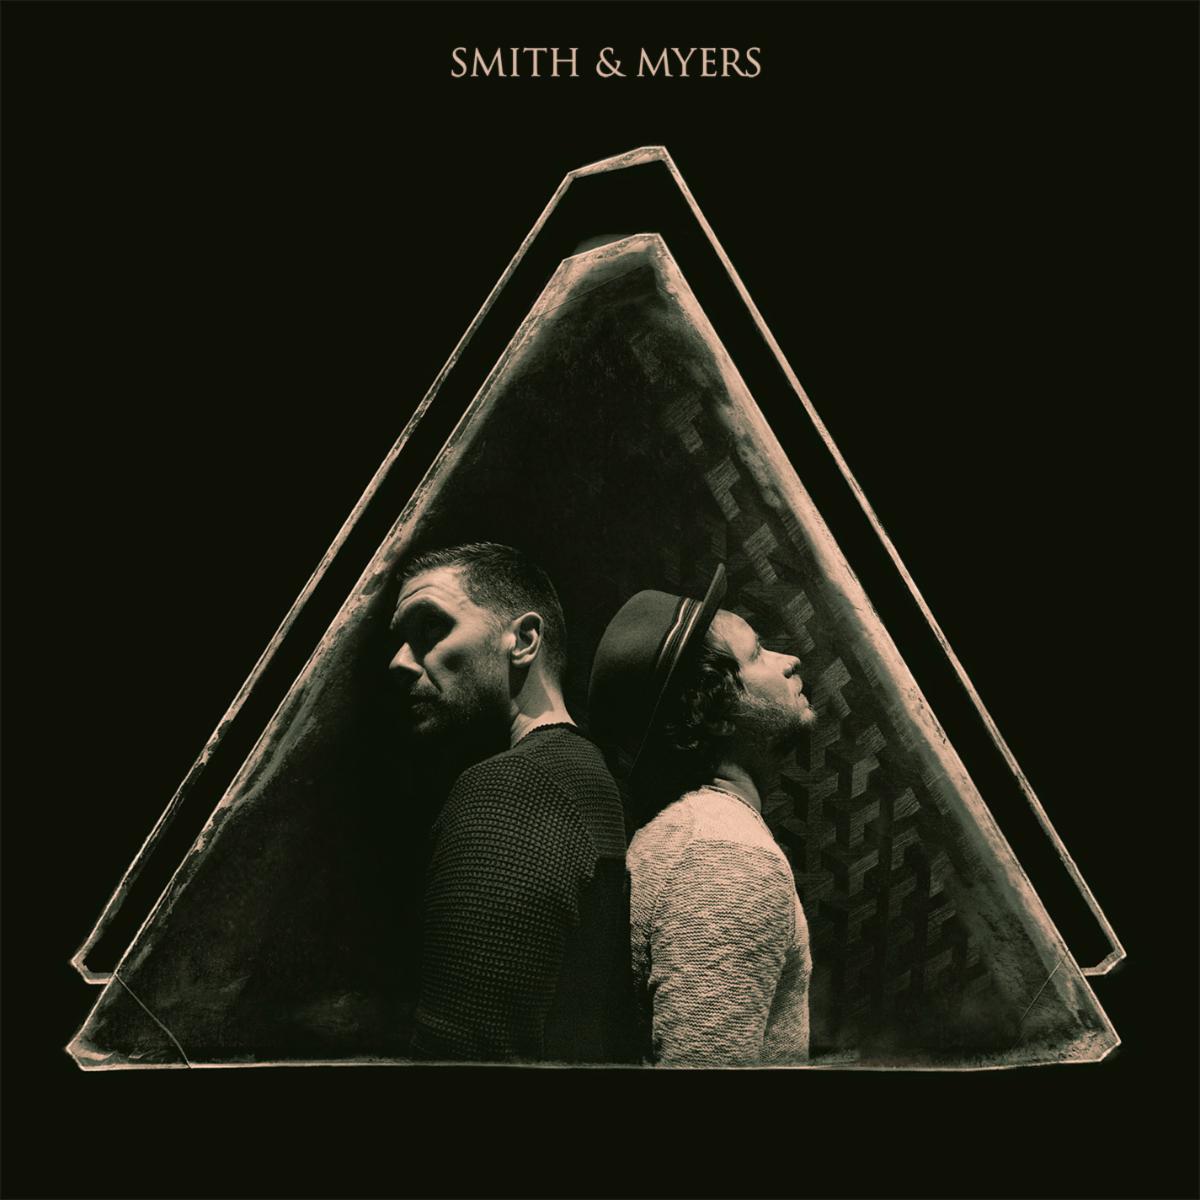 Brent Smith & Zach Myers (Smith & Myers) Release New Album Smith & Myers Volume 2